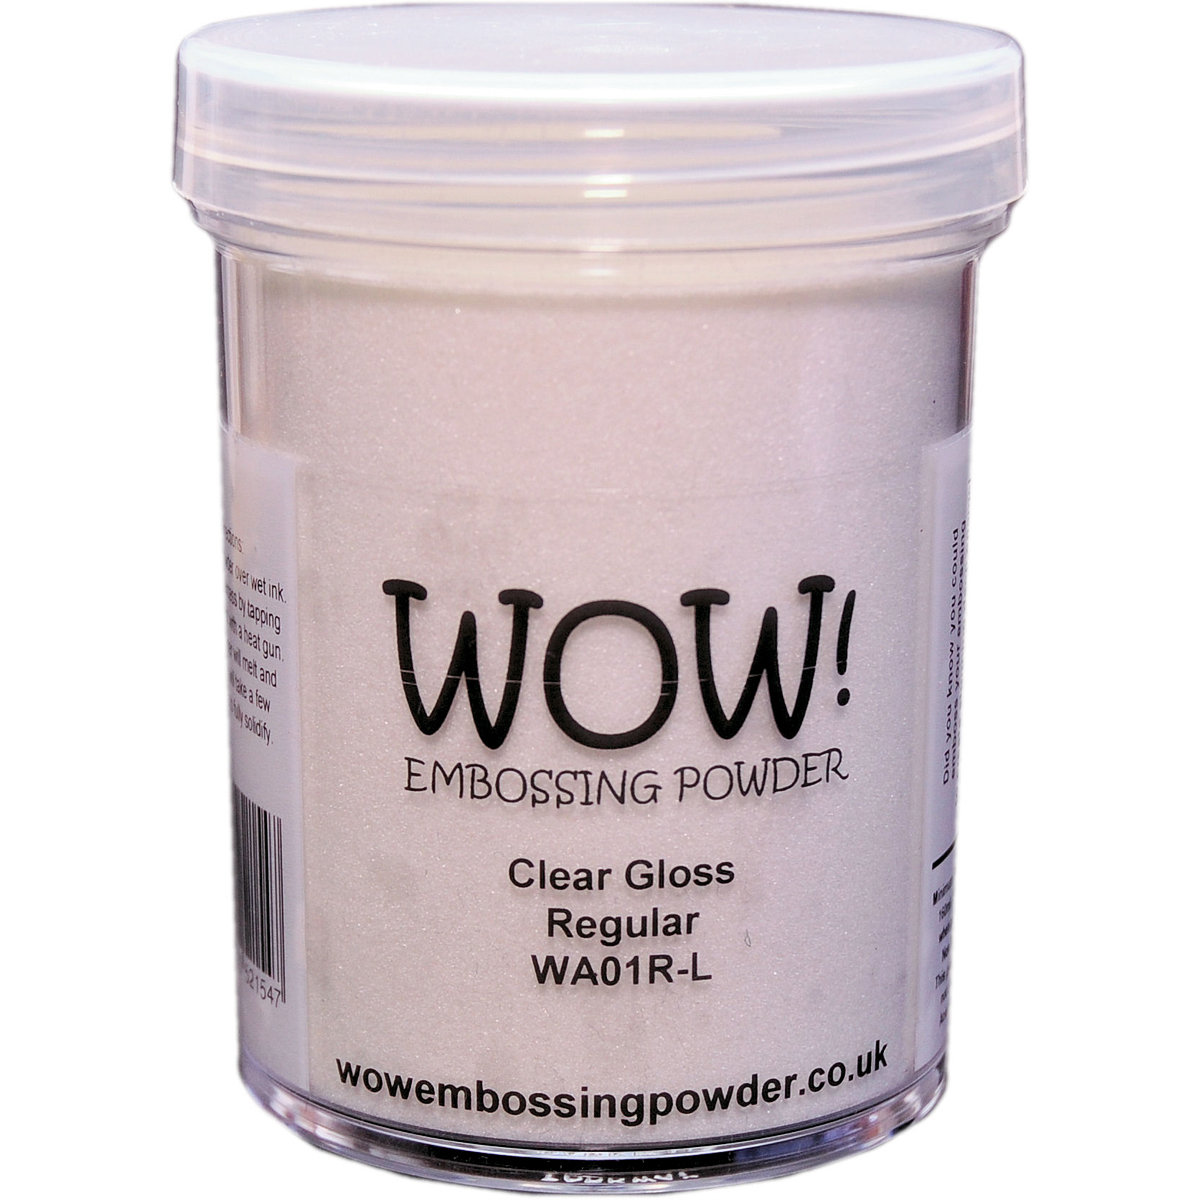 WOW! CLEAR GLOSS- Regular Embossing Powder- Large jar